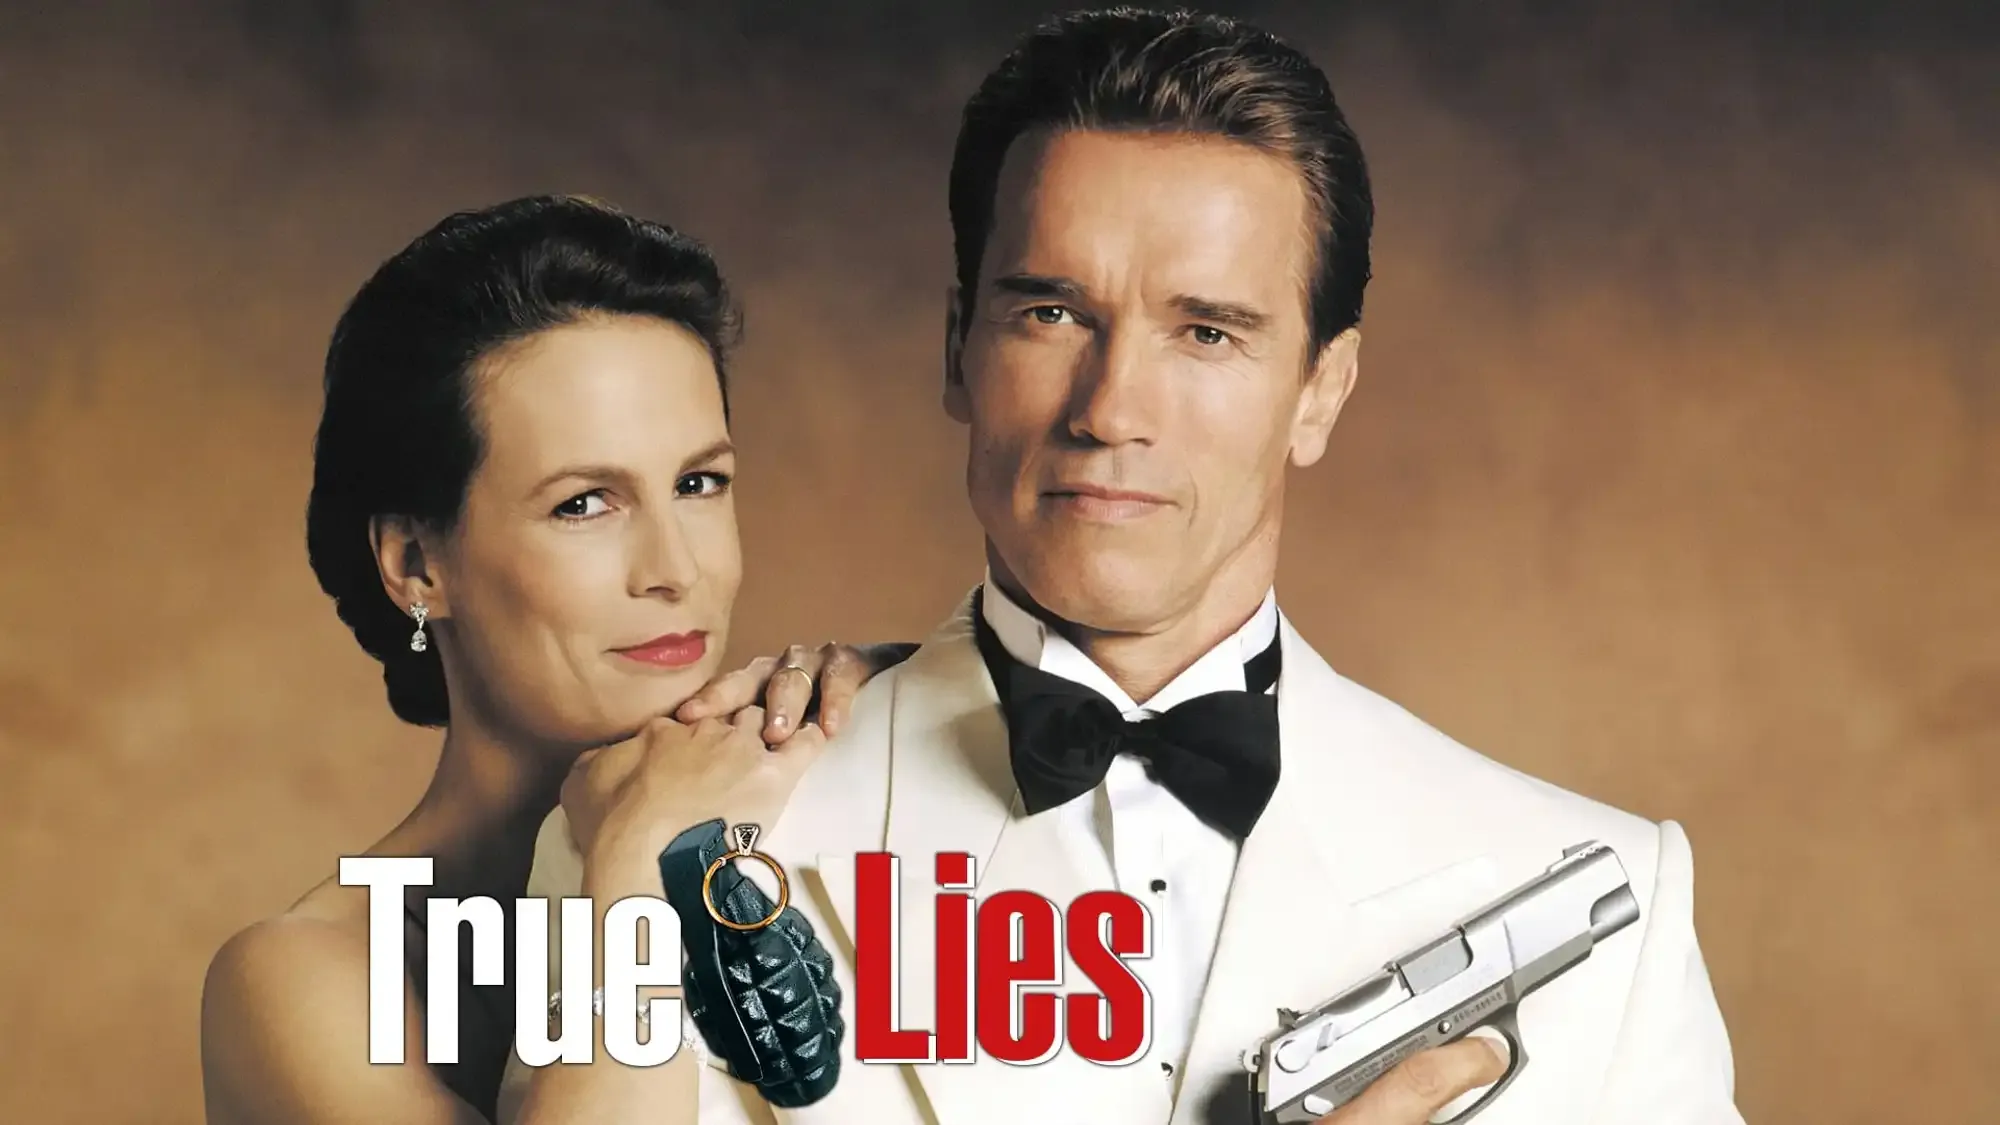 True Lies movie review